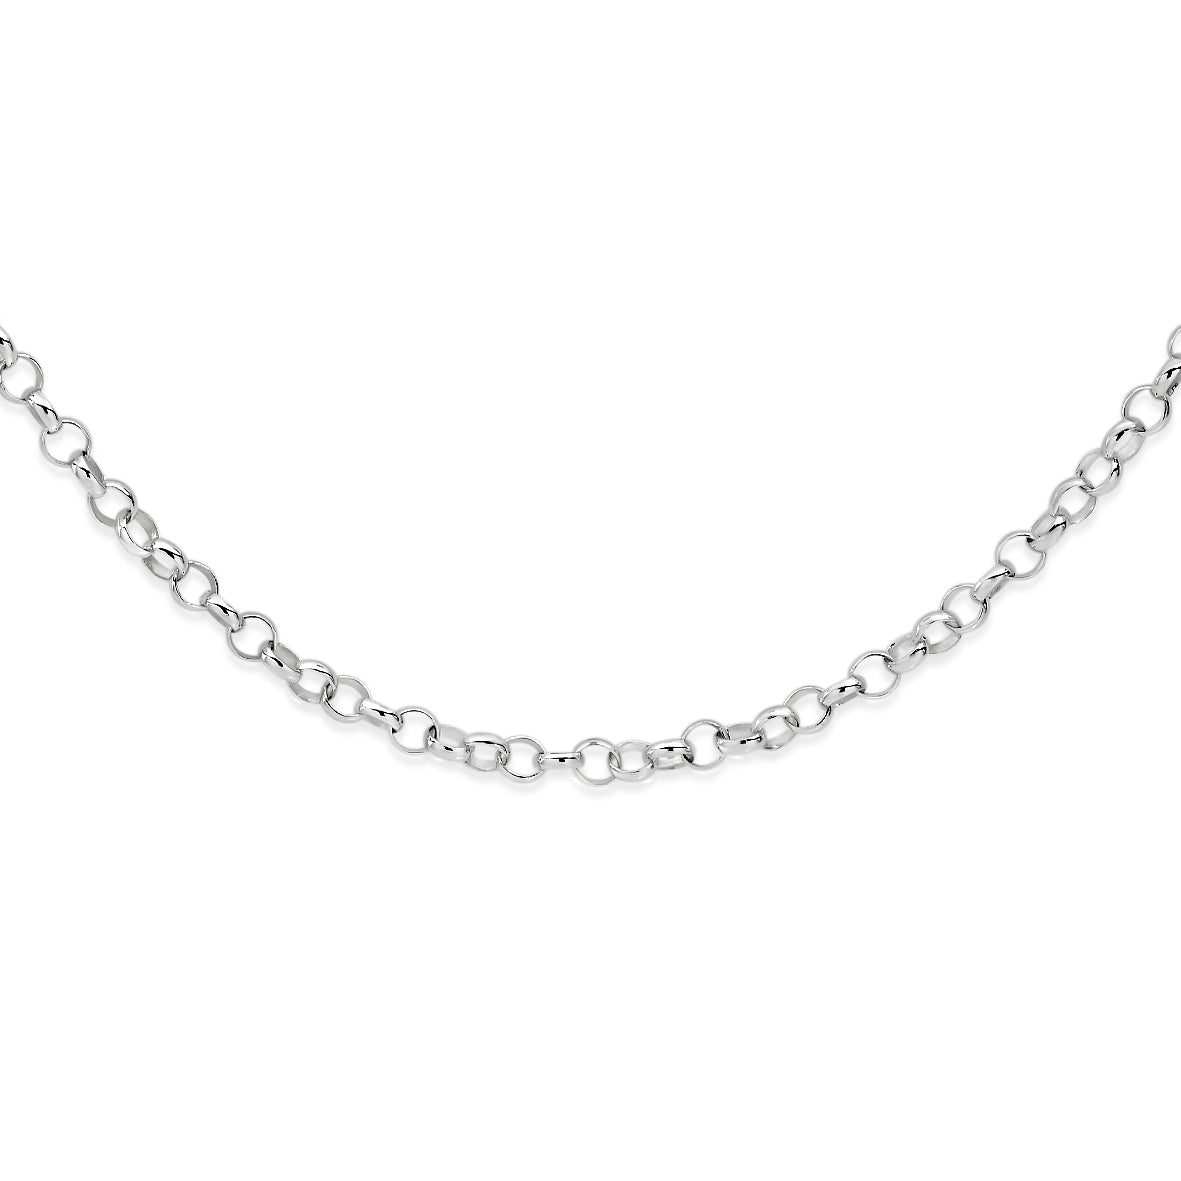 Sterling silver belcher link chain